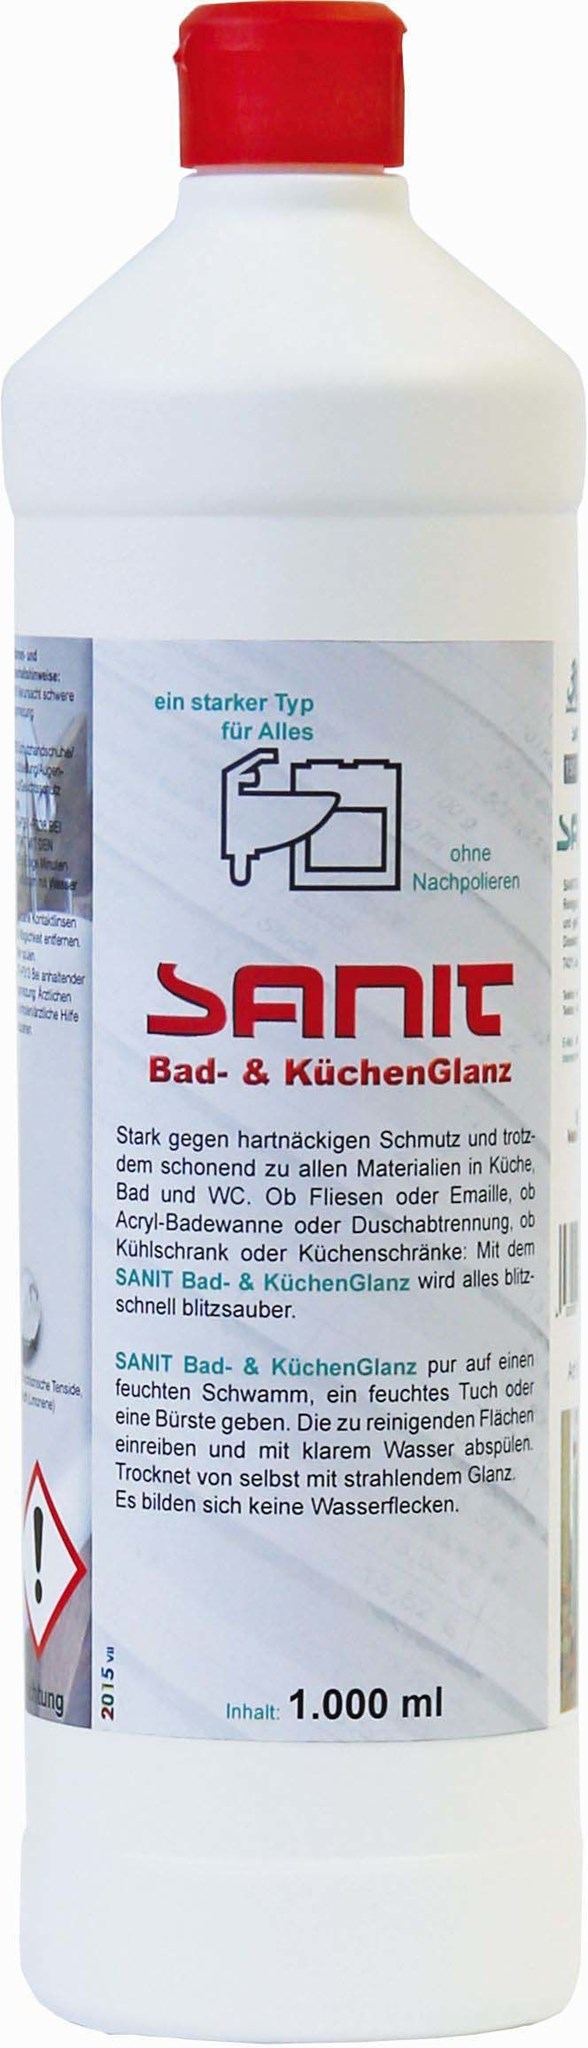 SANIT Bad- & KüchenGlanz Clean & Polish 1000 ml 3041 resmi